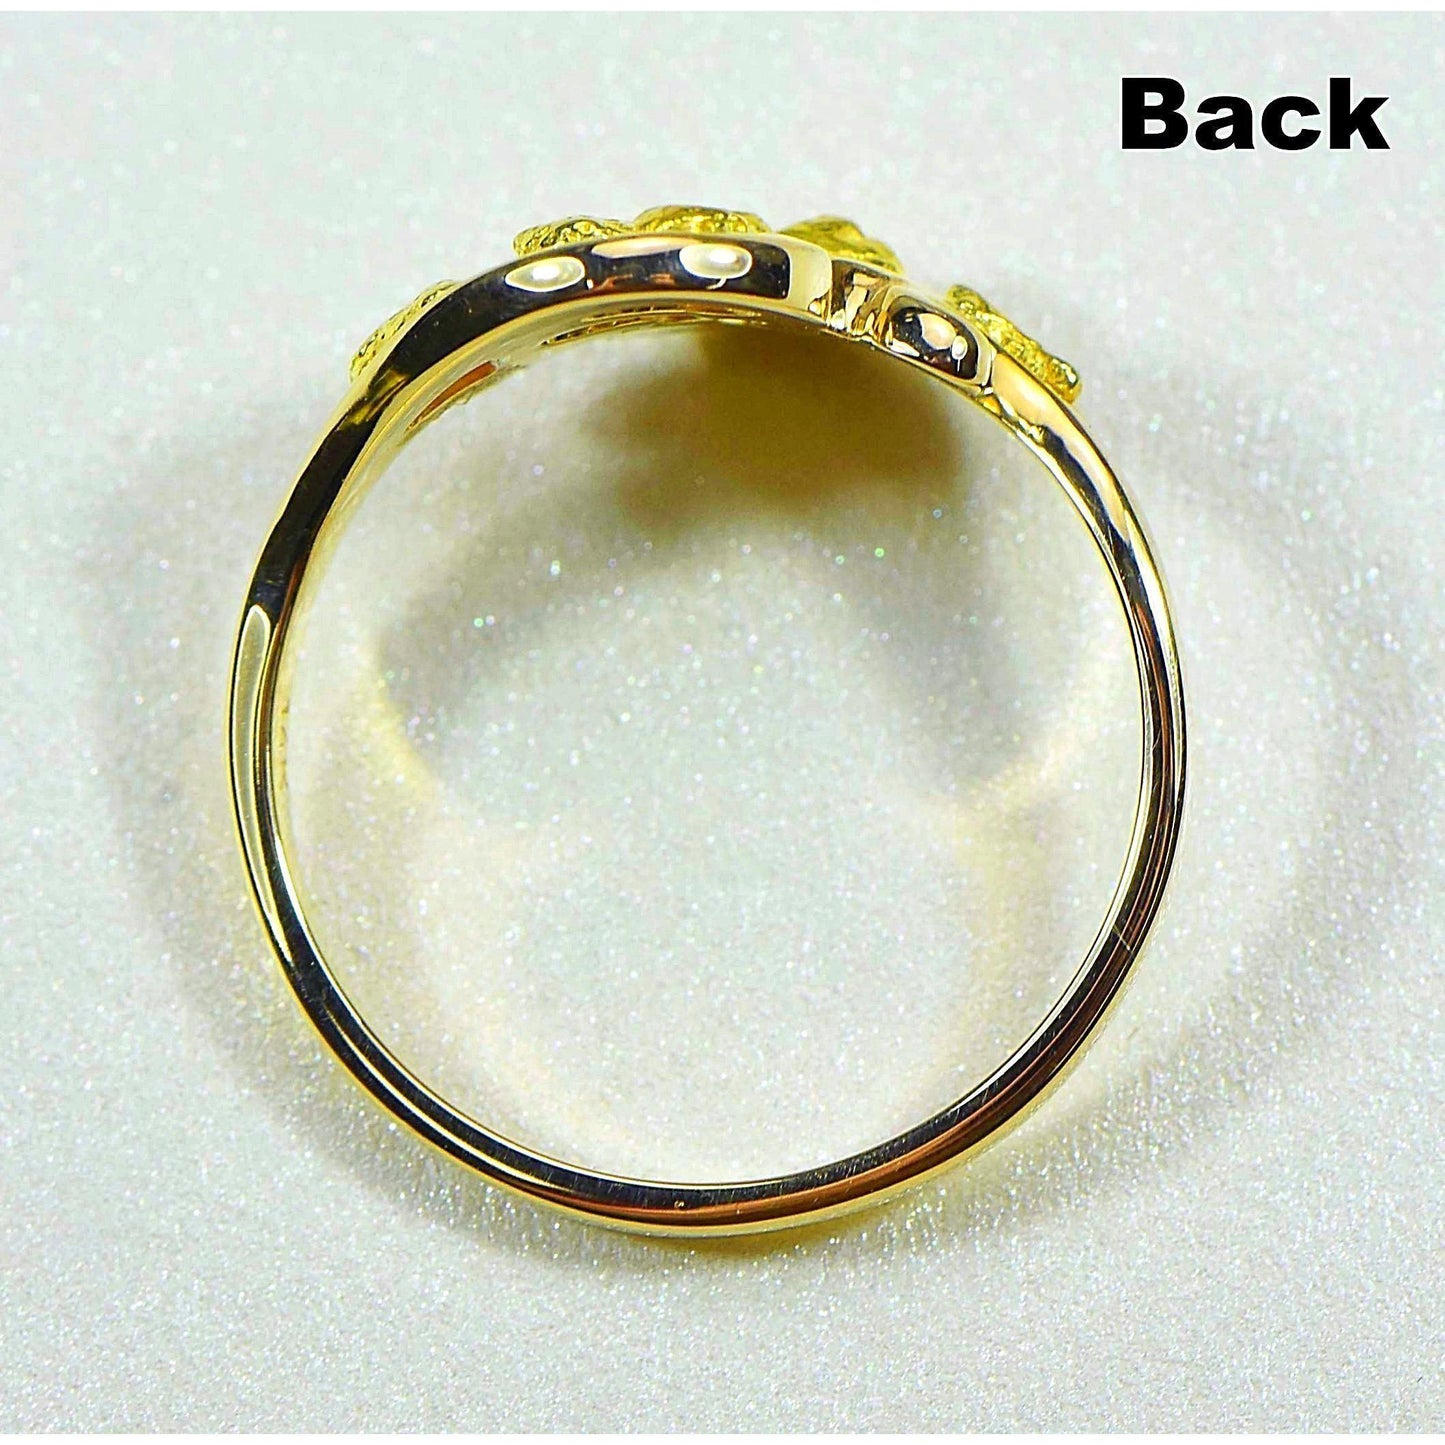 Orocal Gold Nugget Ladies Ring RL186-Destination Gold Detectors